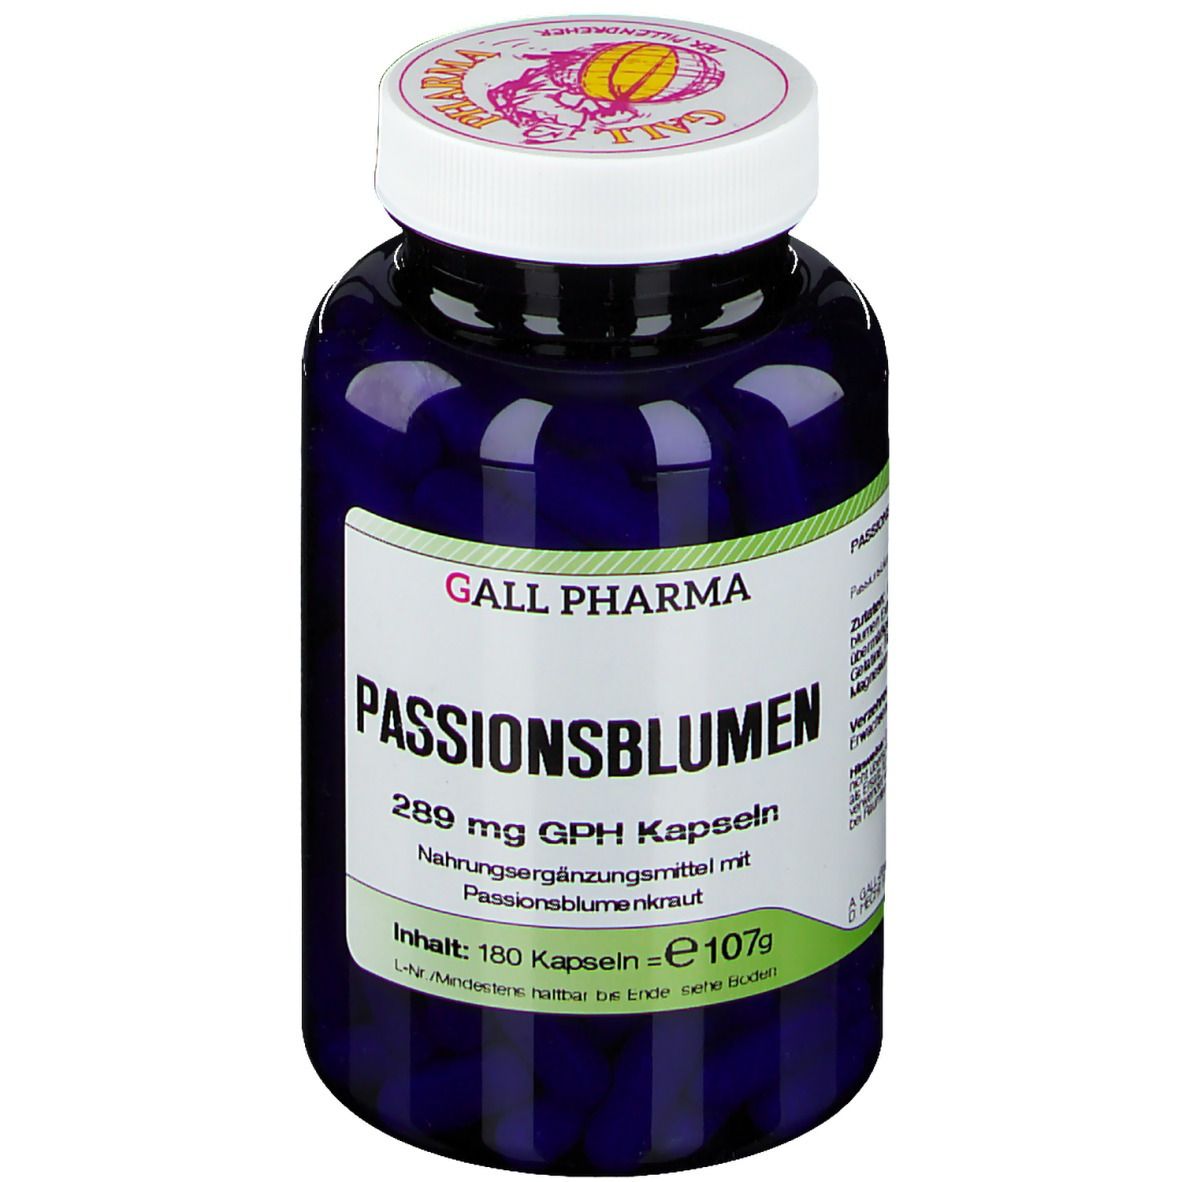 Gall Pharma Passionsblumen 289 mg GPH Kapseln